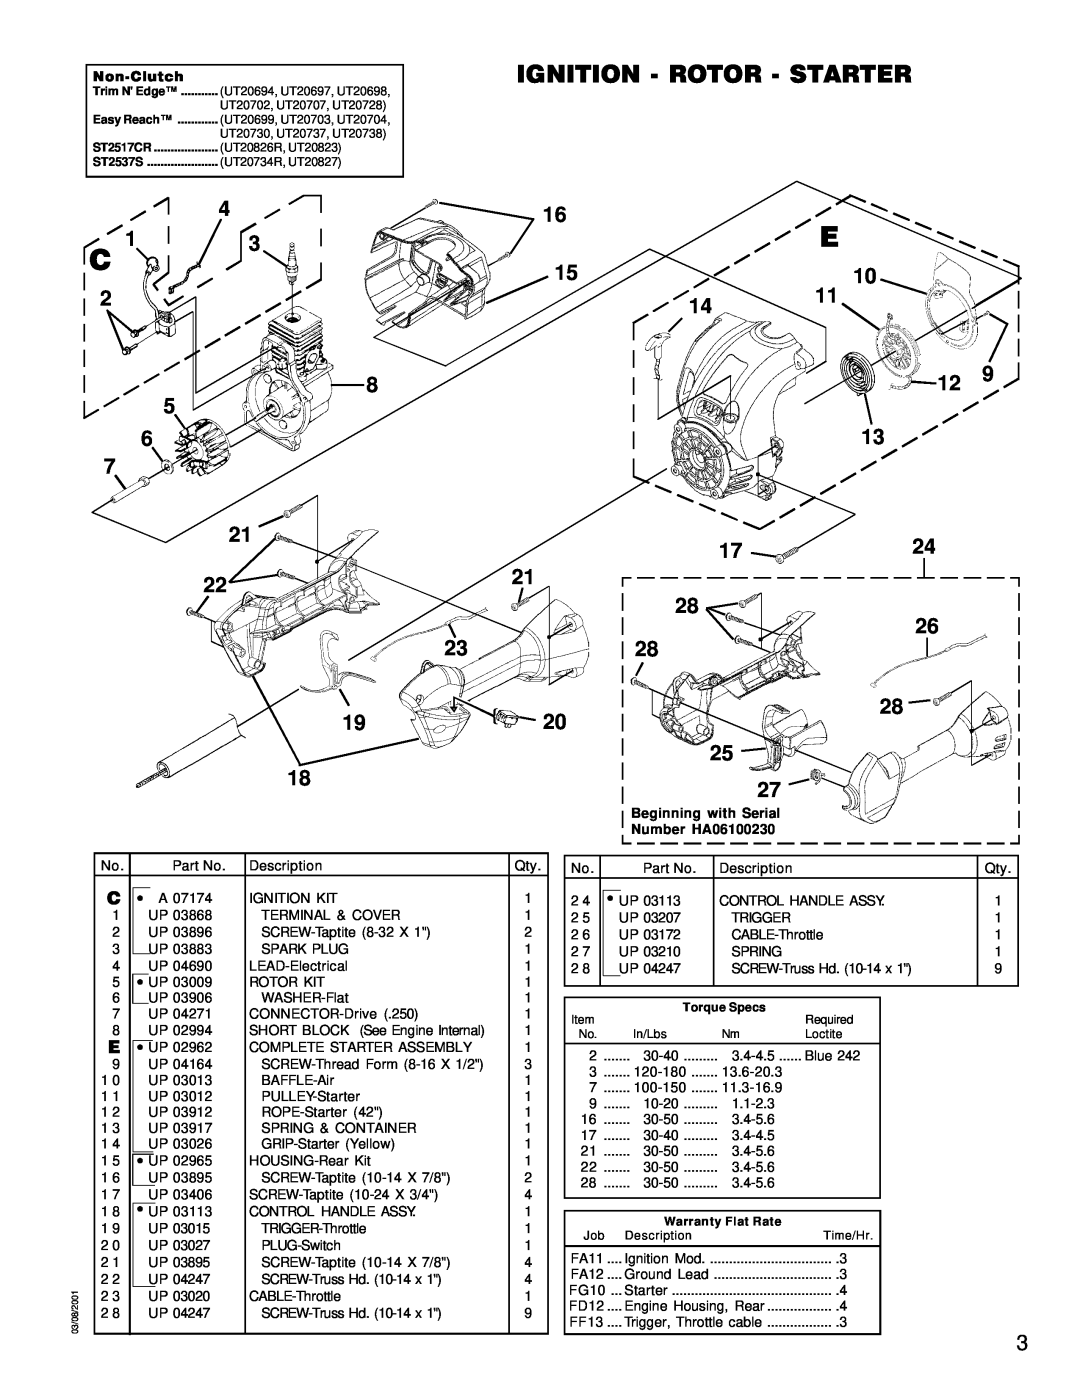 Homelite UT20823 manual Ignition - Rotor - Starter, Beginning with Serial Number HA06100230, Trim N Edge, ST2517CR, ST2537S 